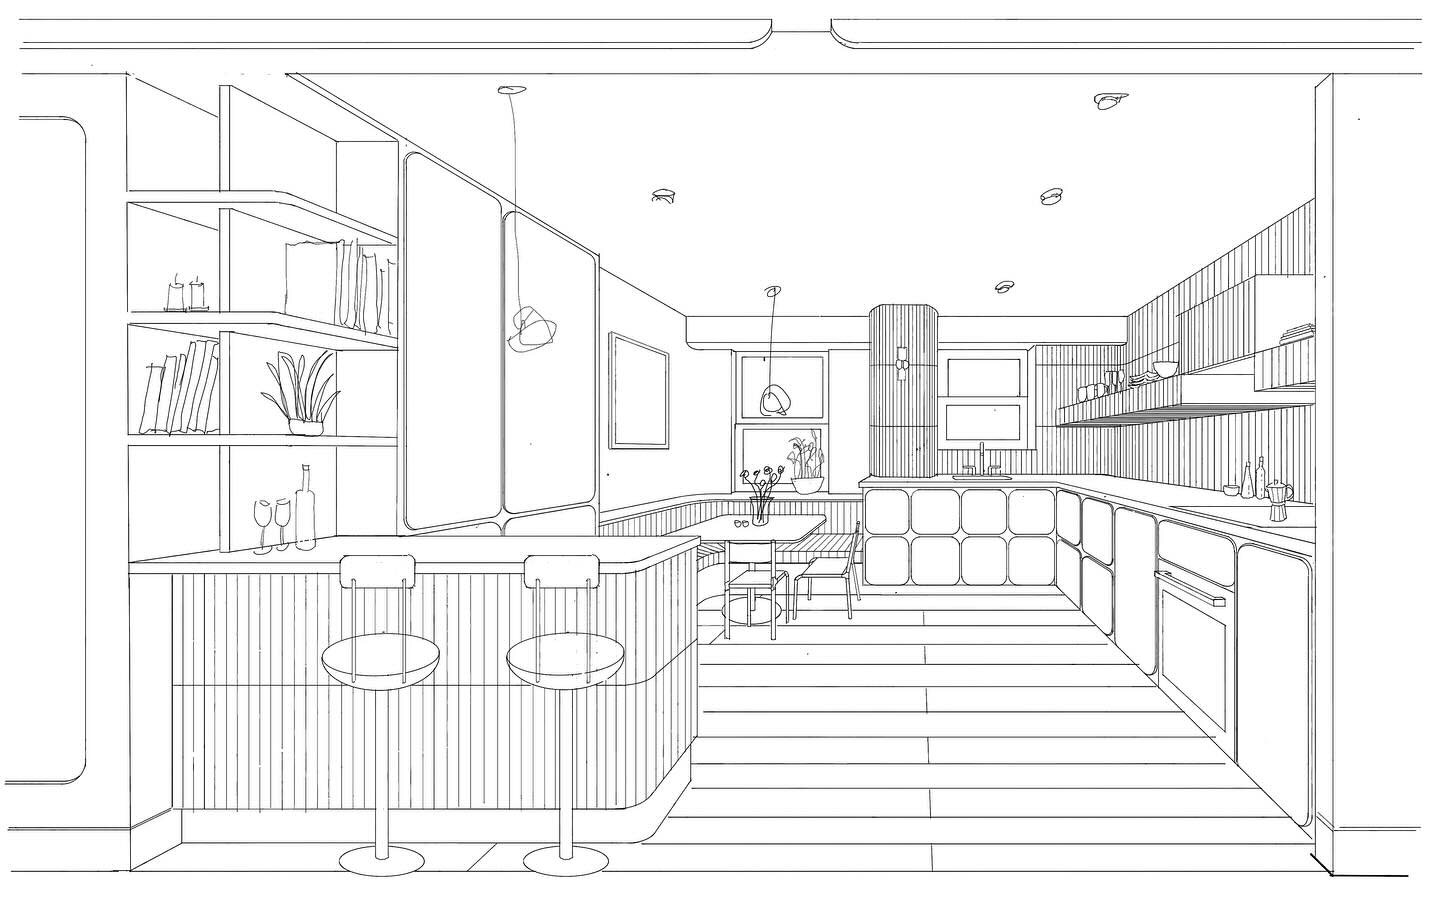 West 9th Residence | Kitchen Rendering | Design Process 
.
.
.
Sketch study of West Village penthouse kitchen.
#sketch #kitchen #design #architecture #architecture #westvillage #nyc #grenwichvillage #custommade #interiordesign #interiorarchitecture #